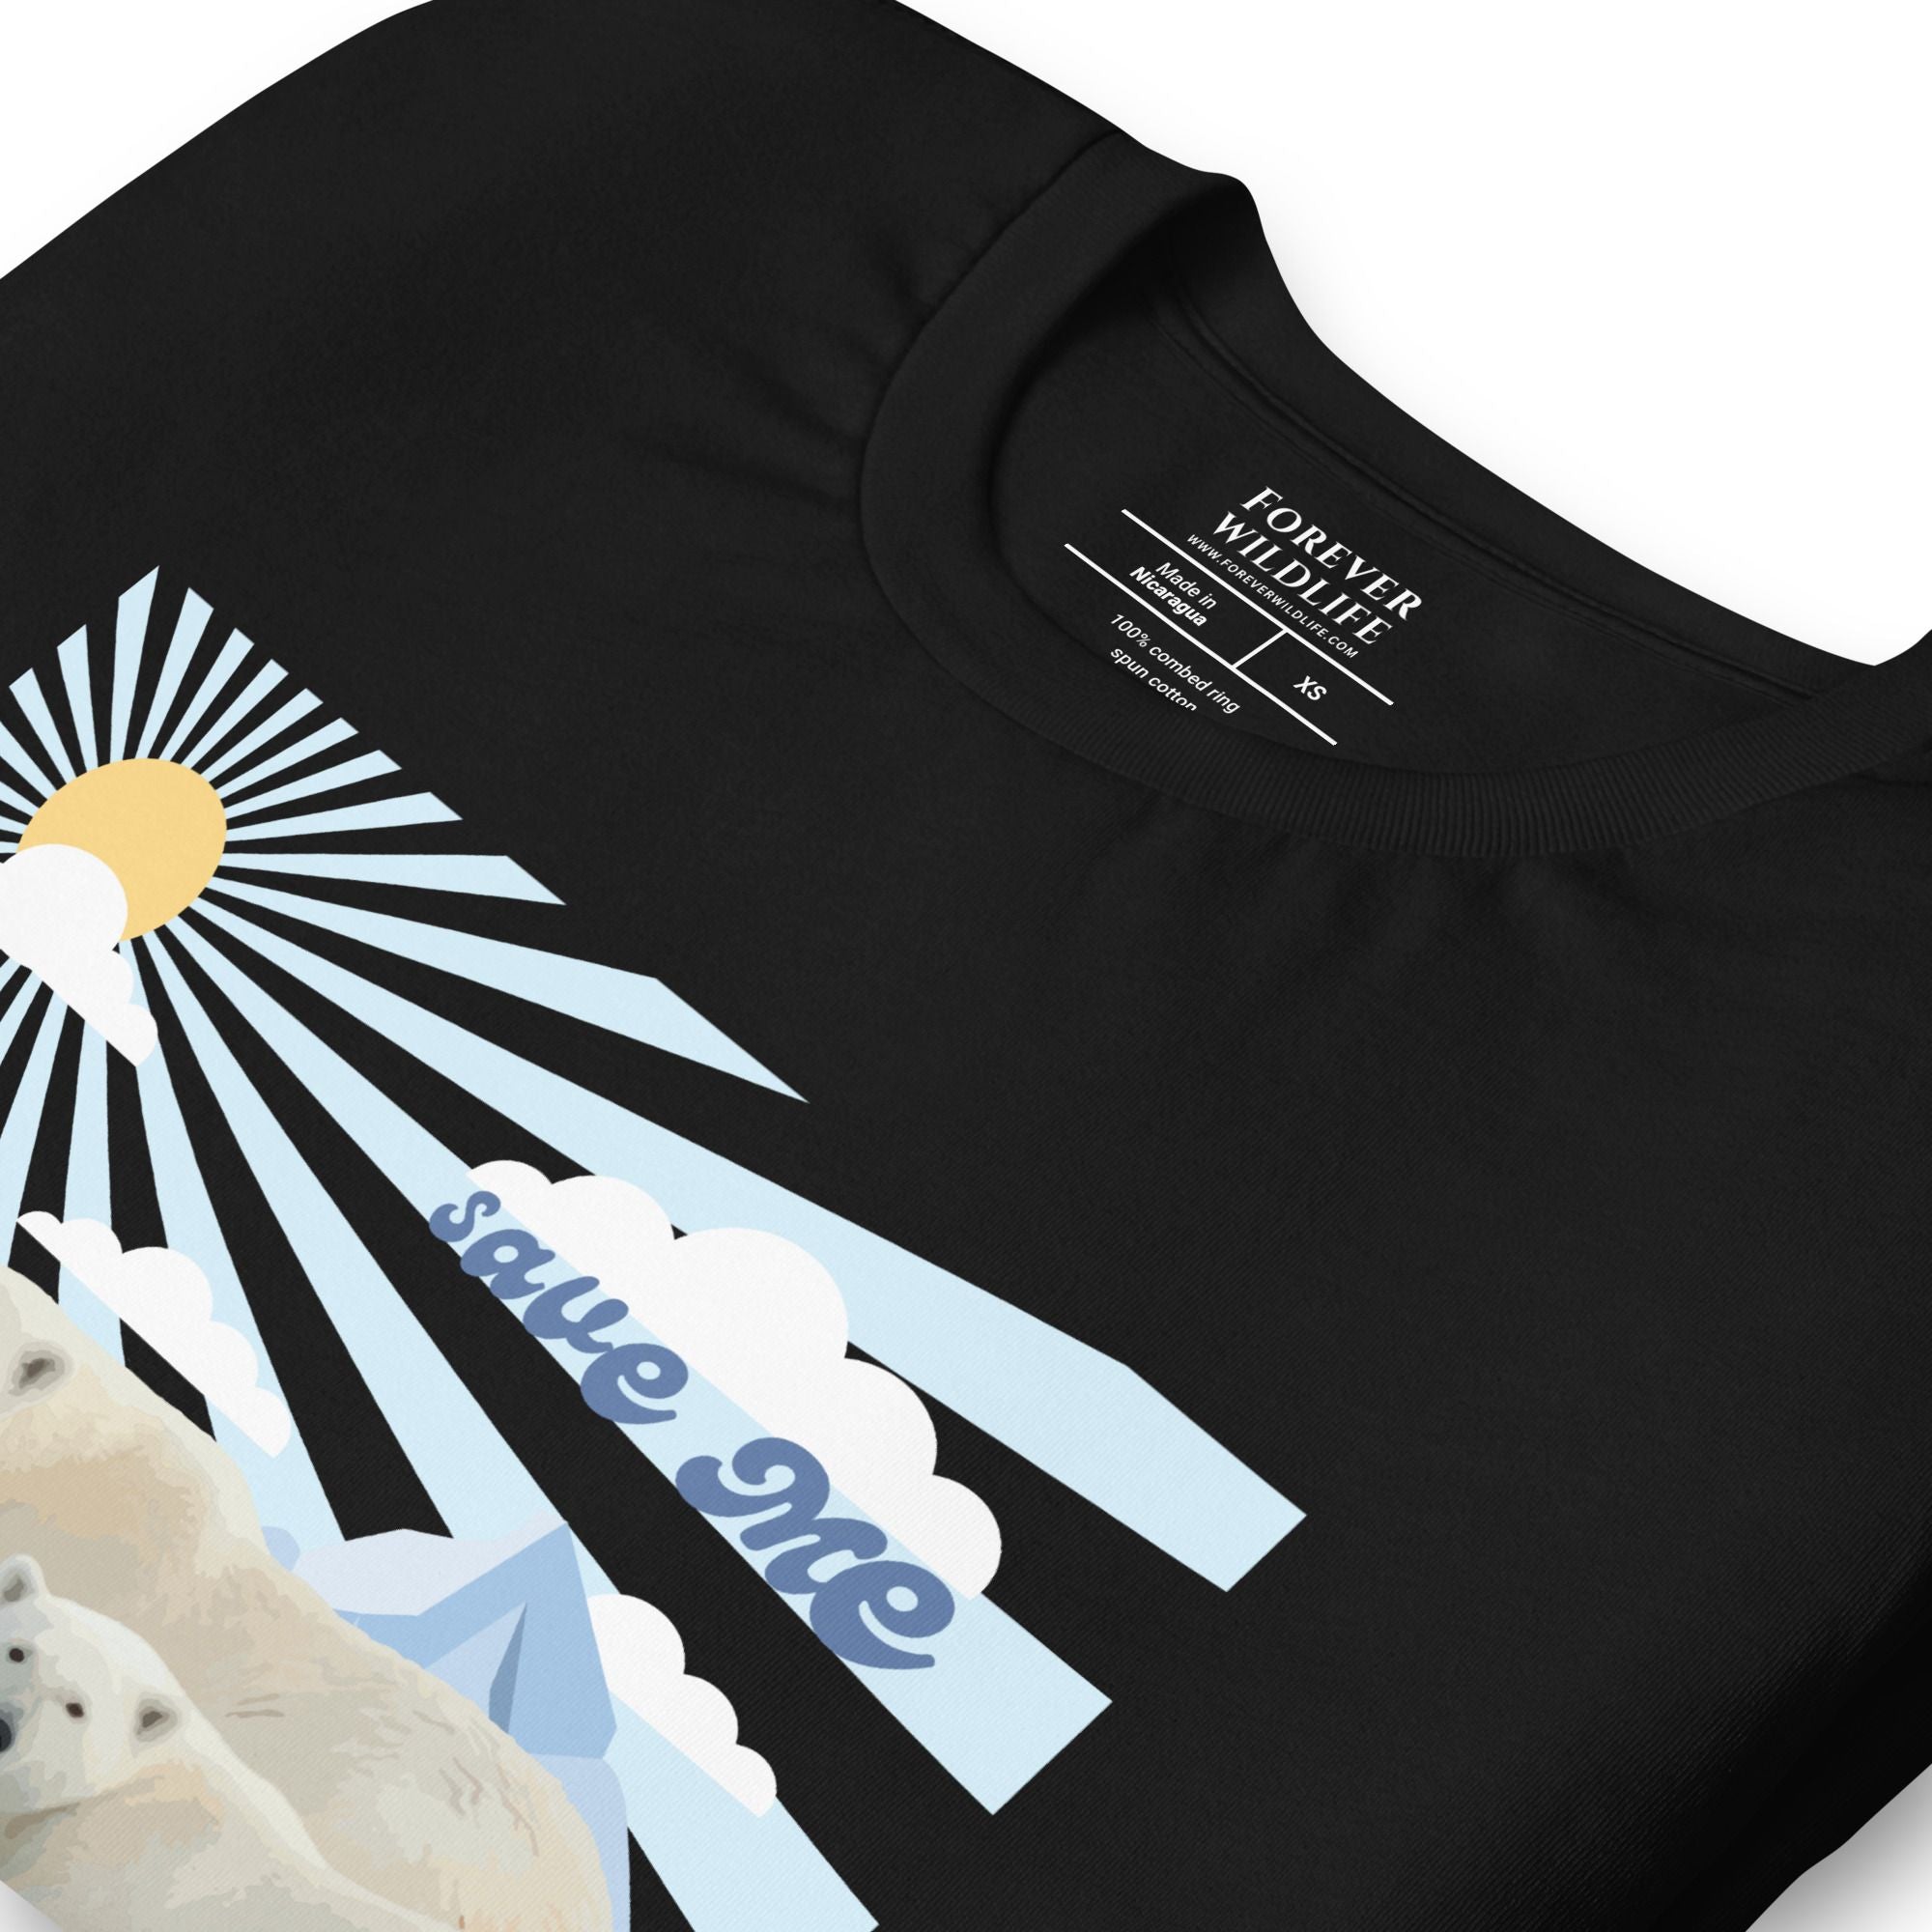 Save The Polar Bears T-Shirt in Black – Premium Wildlife T-Shirt Design, Wildlife Clothing & Apparel from Forever Wildlife